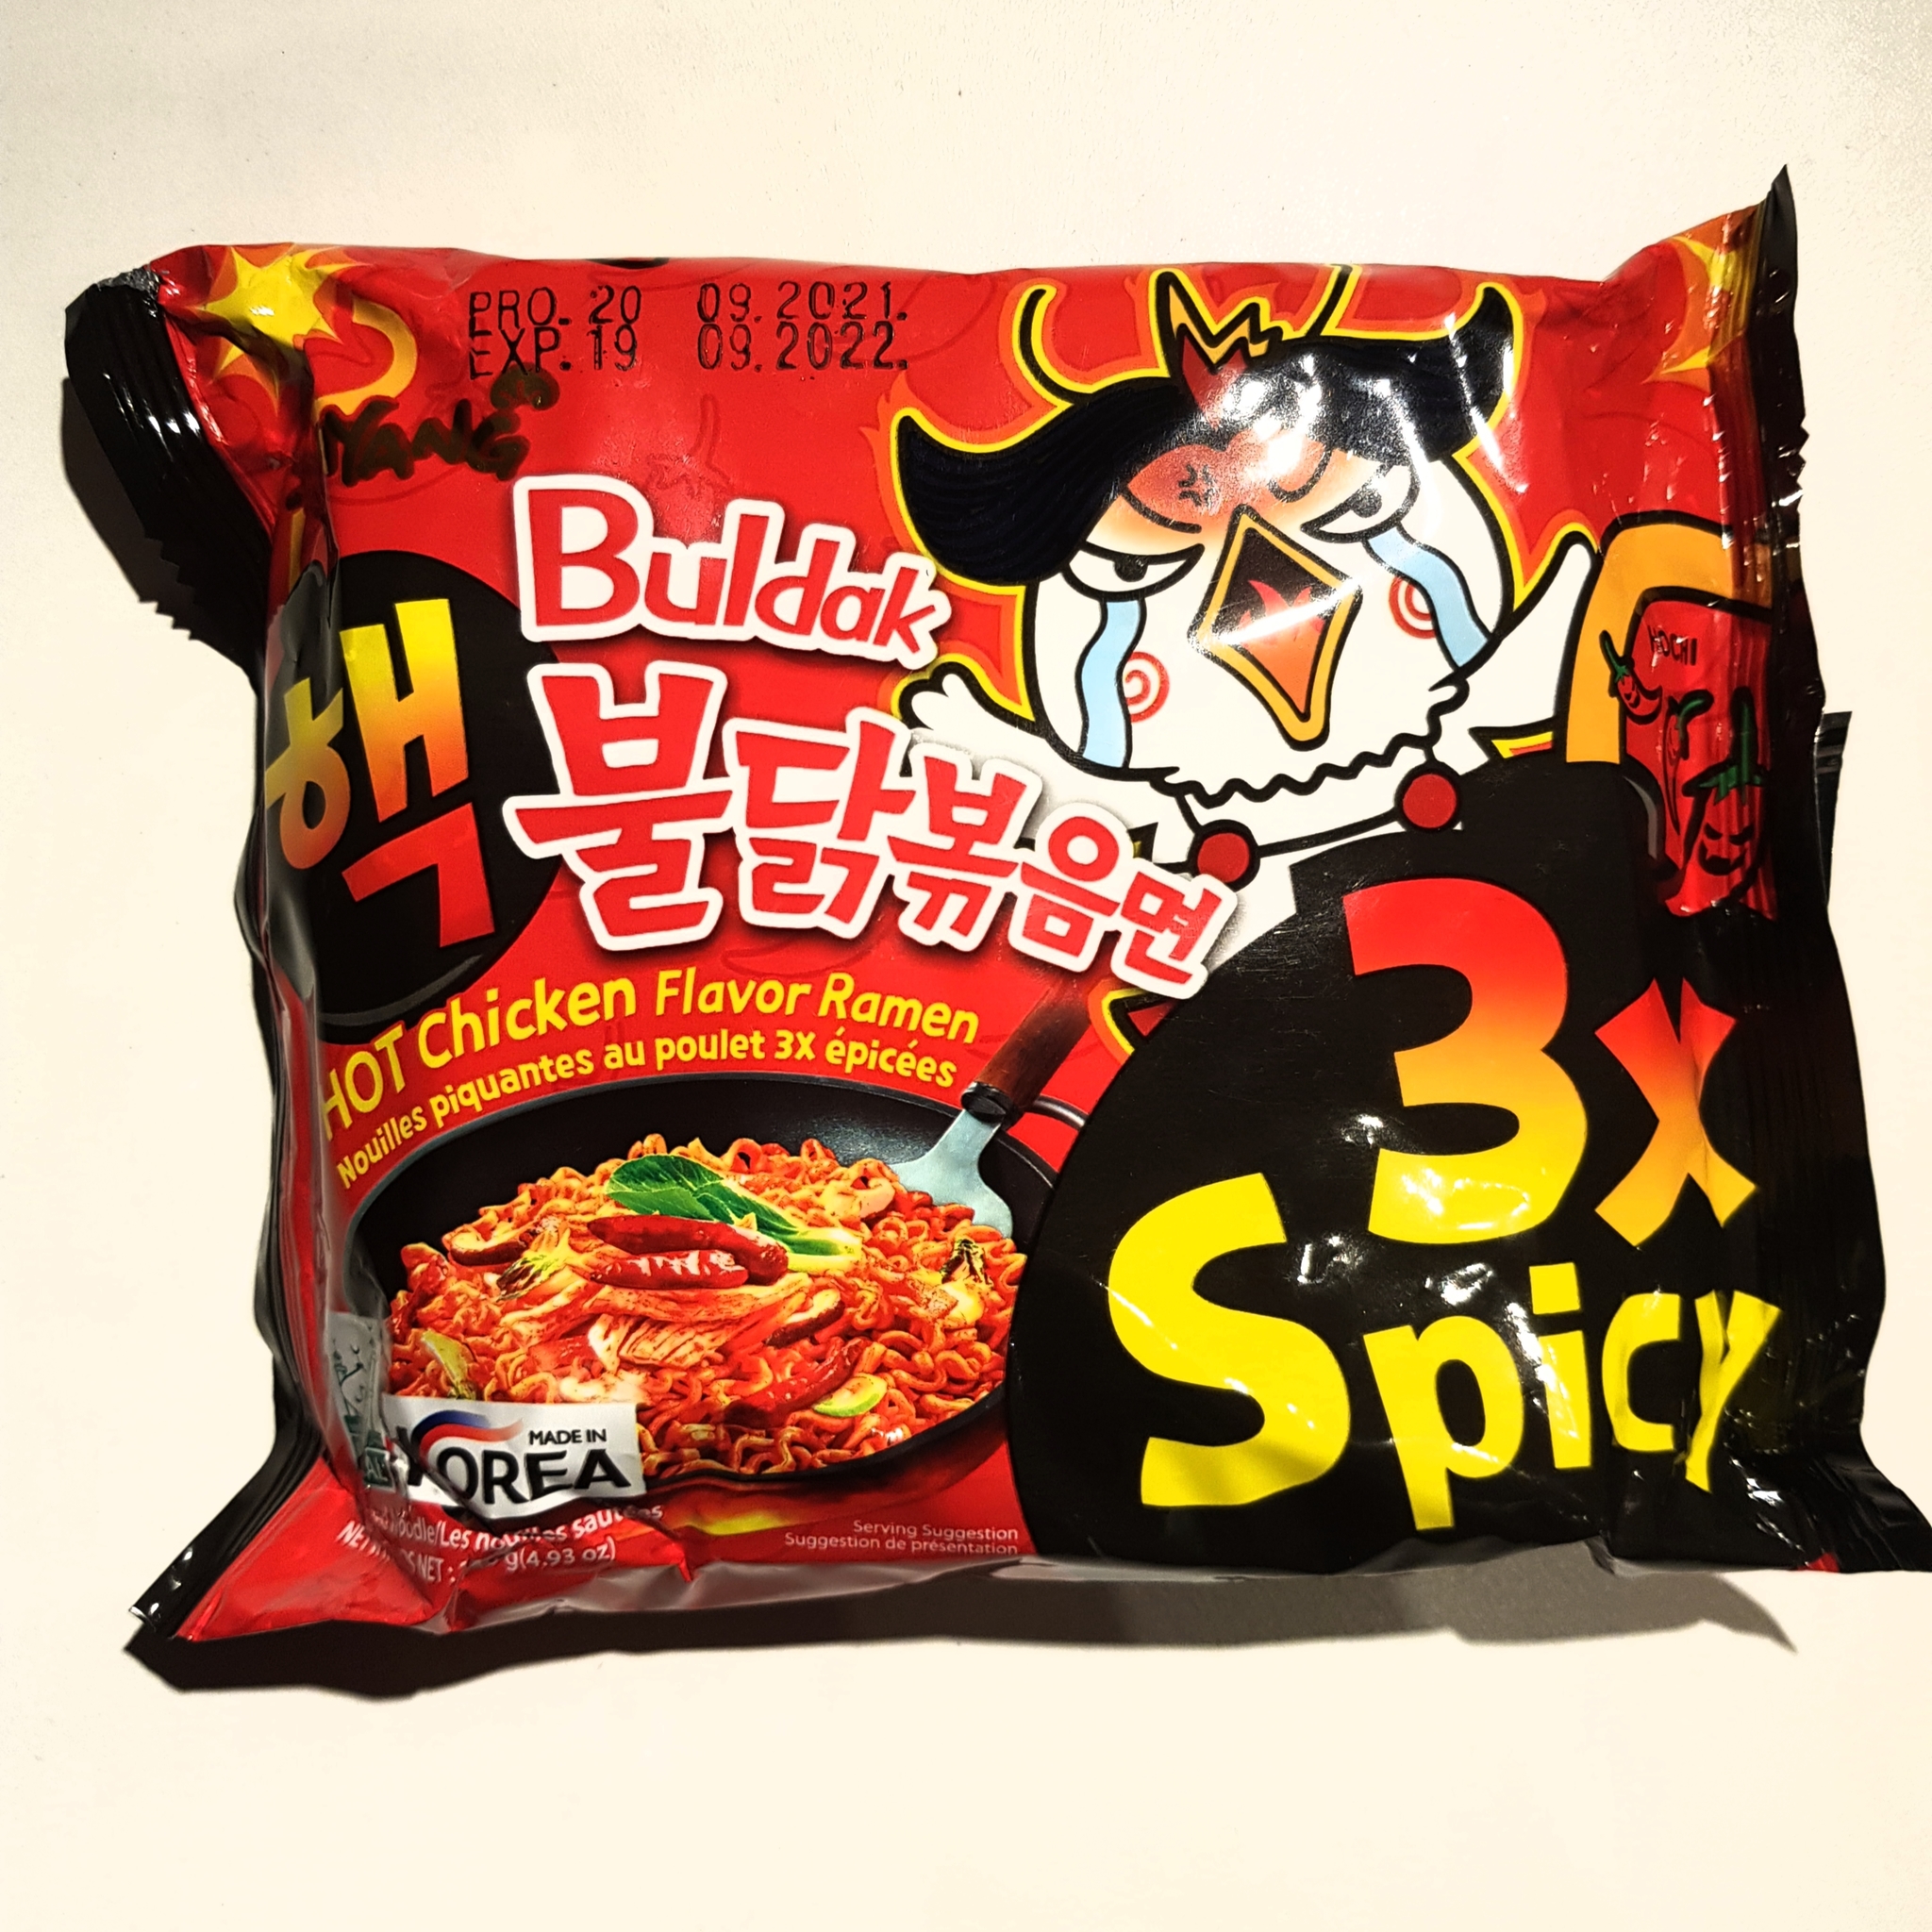 Лапша spicy. Samyang лапша 3x Spicy. Hot Chicken flavor Ramen 3x Spicy. Корейская лапша hot Chicken flavor Ramen. Корейская лапша hot Chicken 3x Spicy.